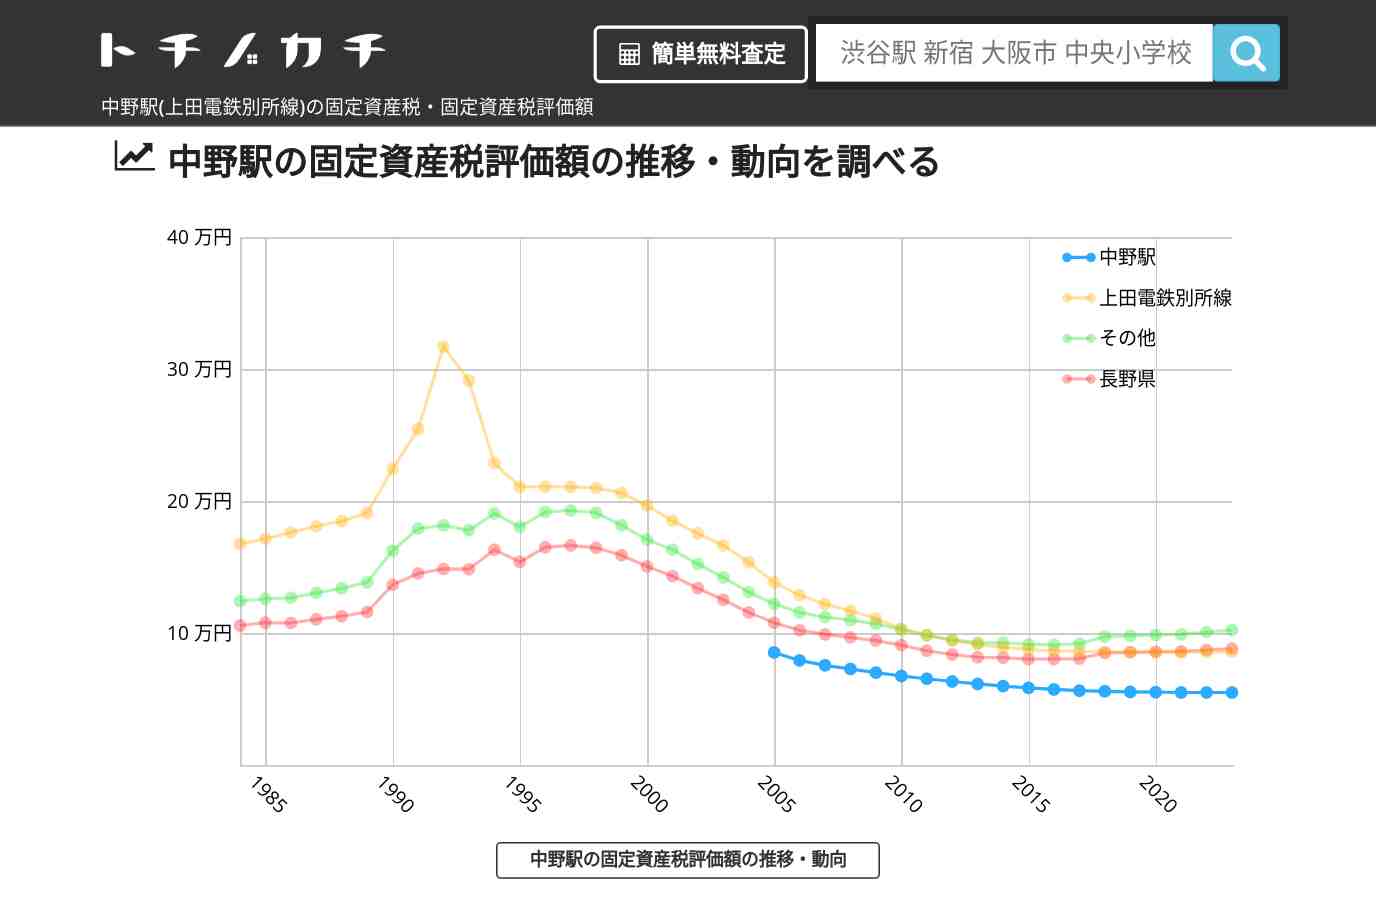 中野駅(上田電鉄別所線)の固定資産税・固定資産税評価額 | トチノカチ